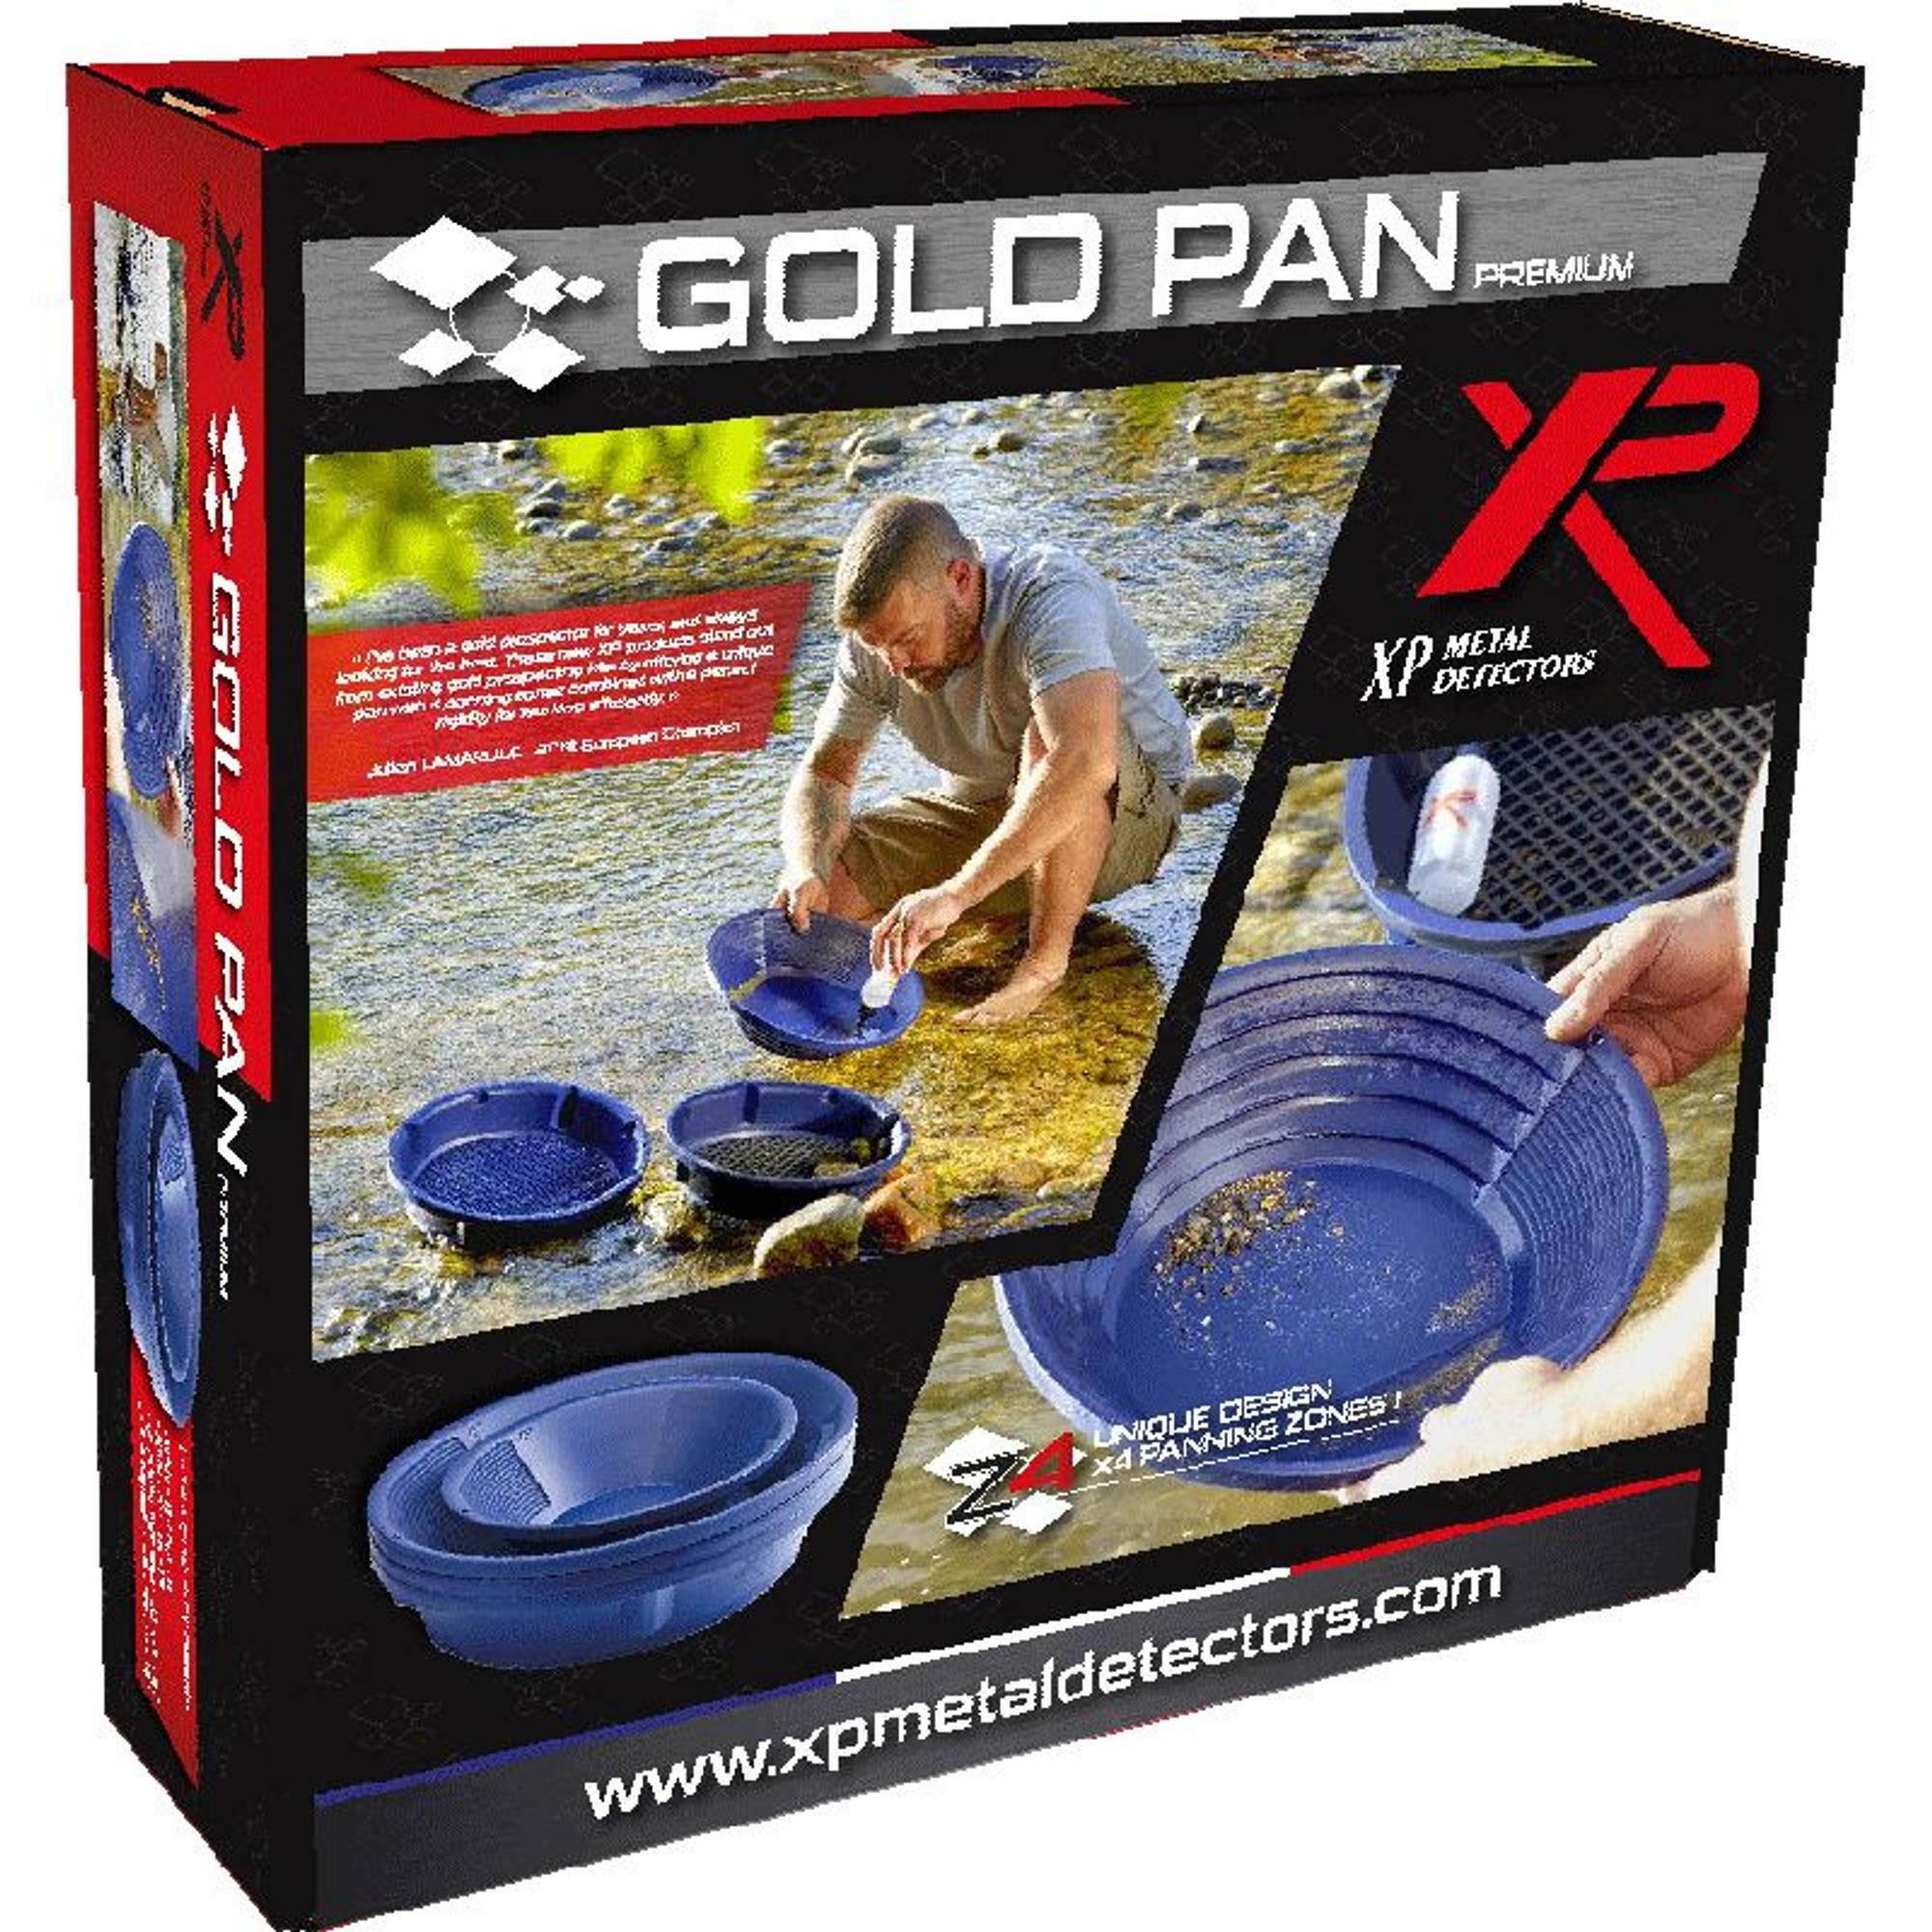 XP Premium Gold Prospecting and Panning Kit